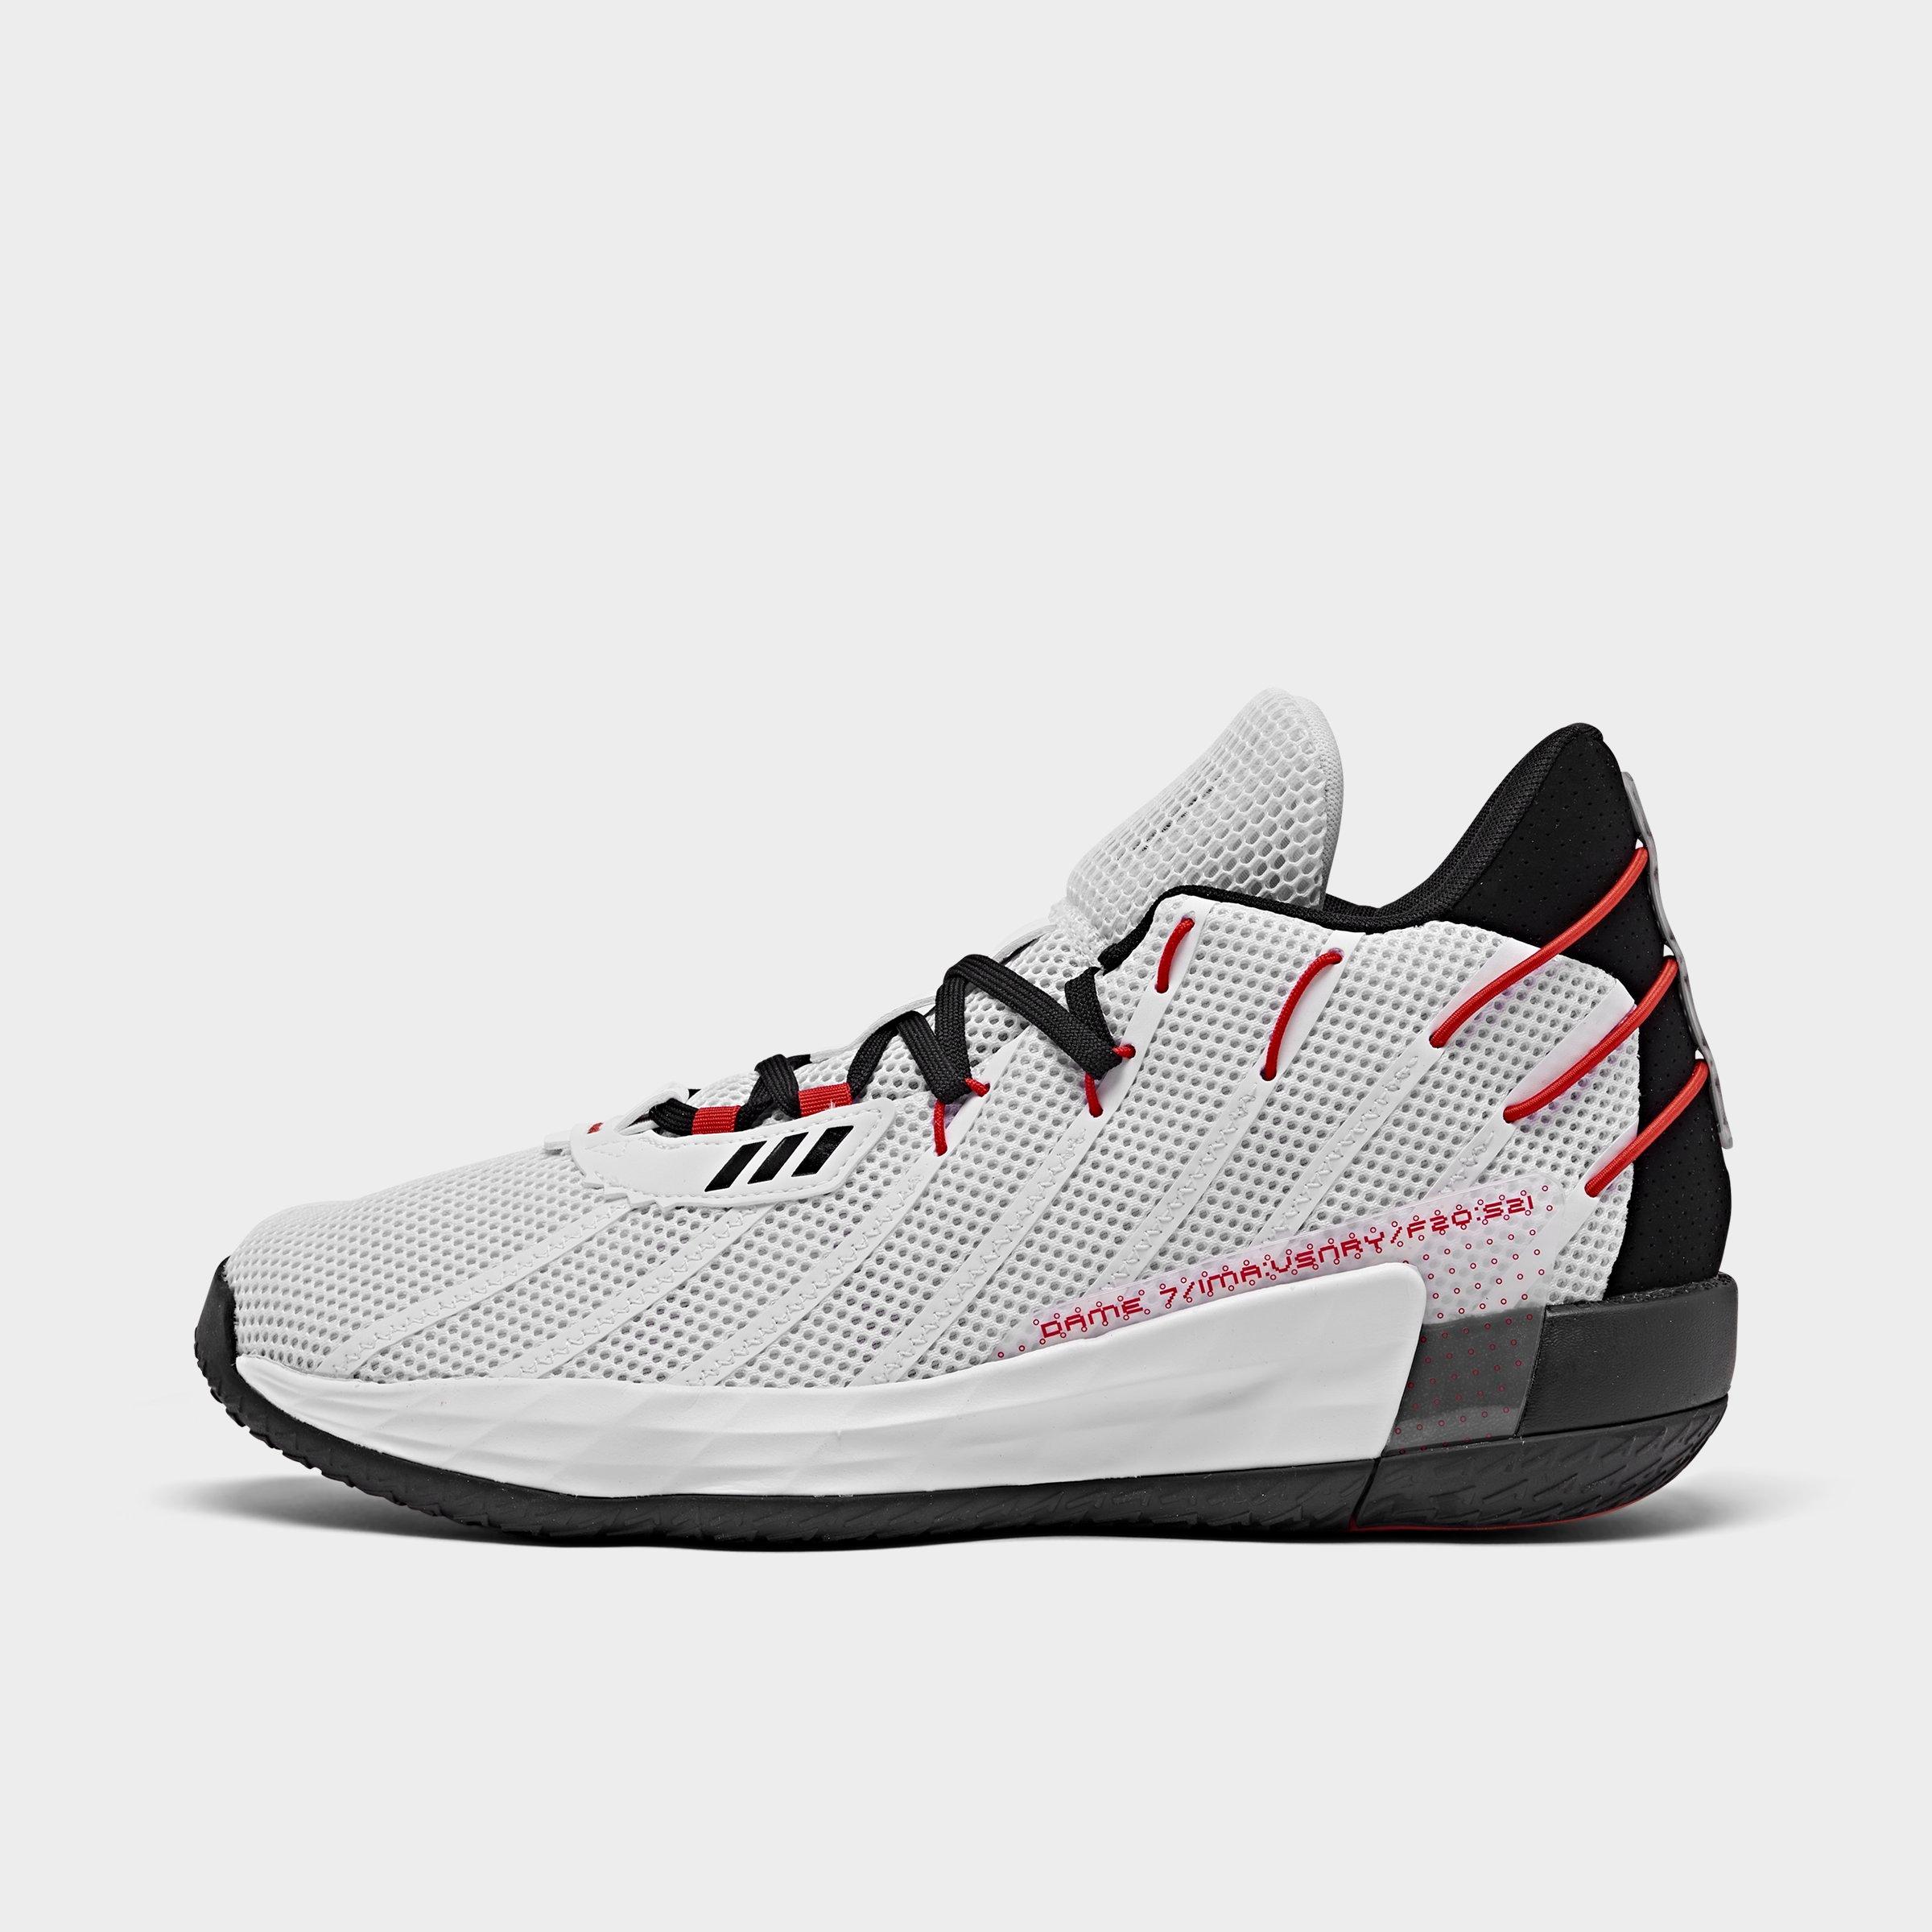 dame 7 basketball shoes